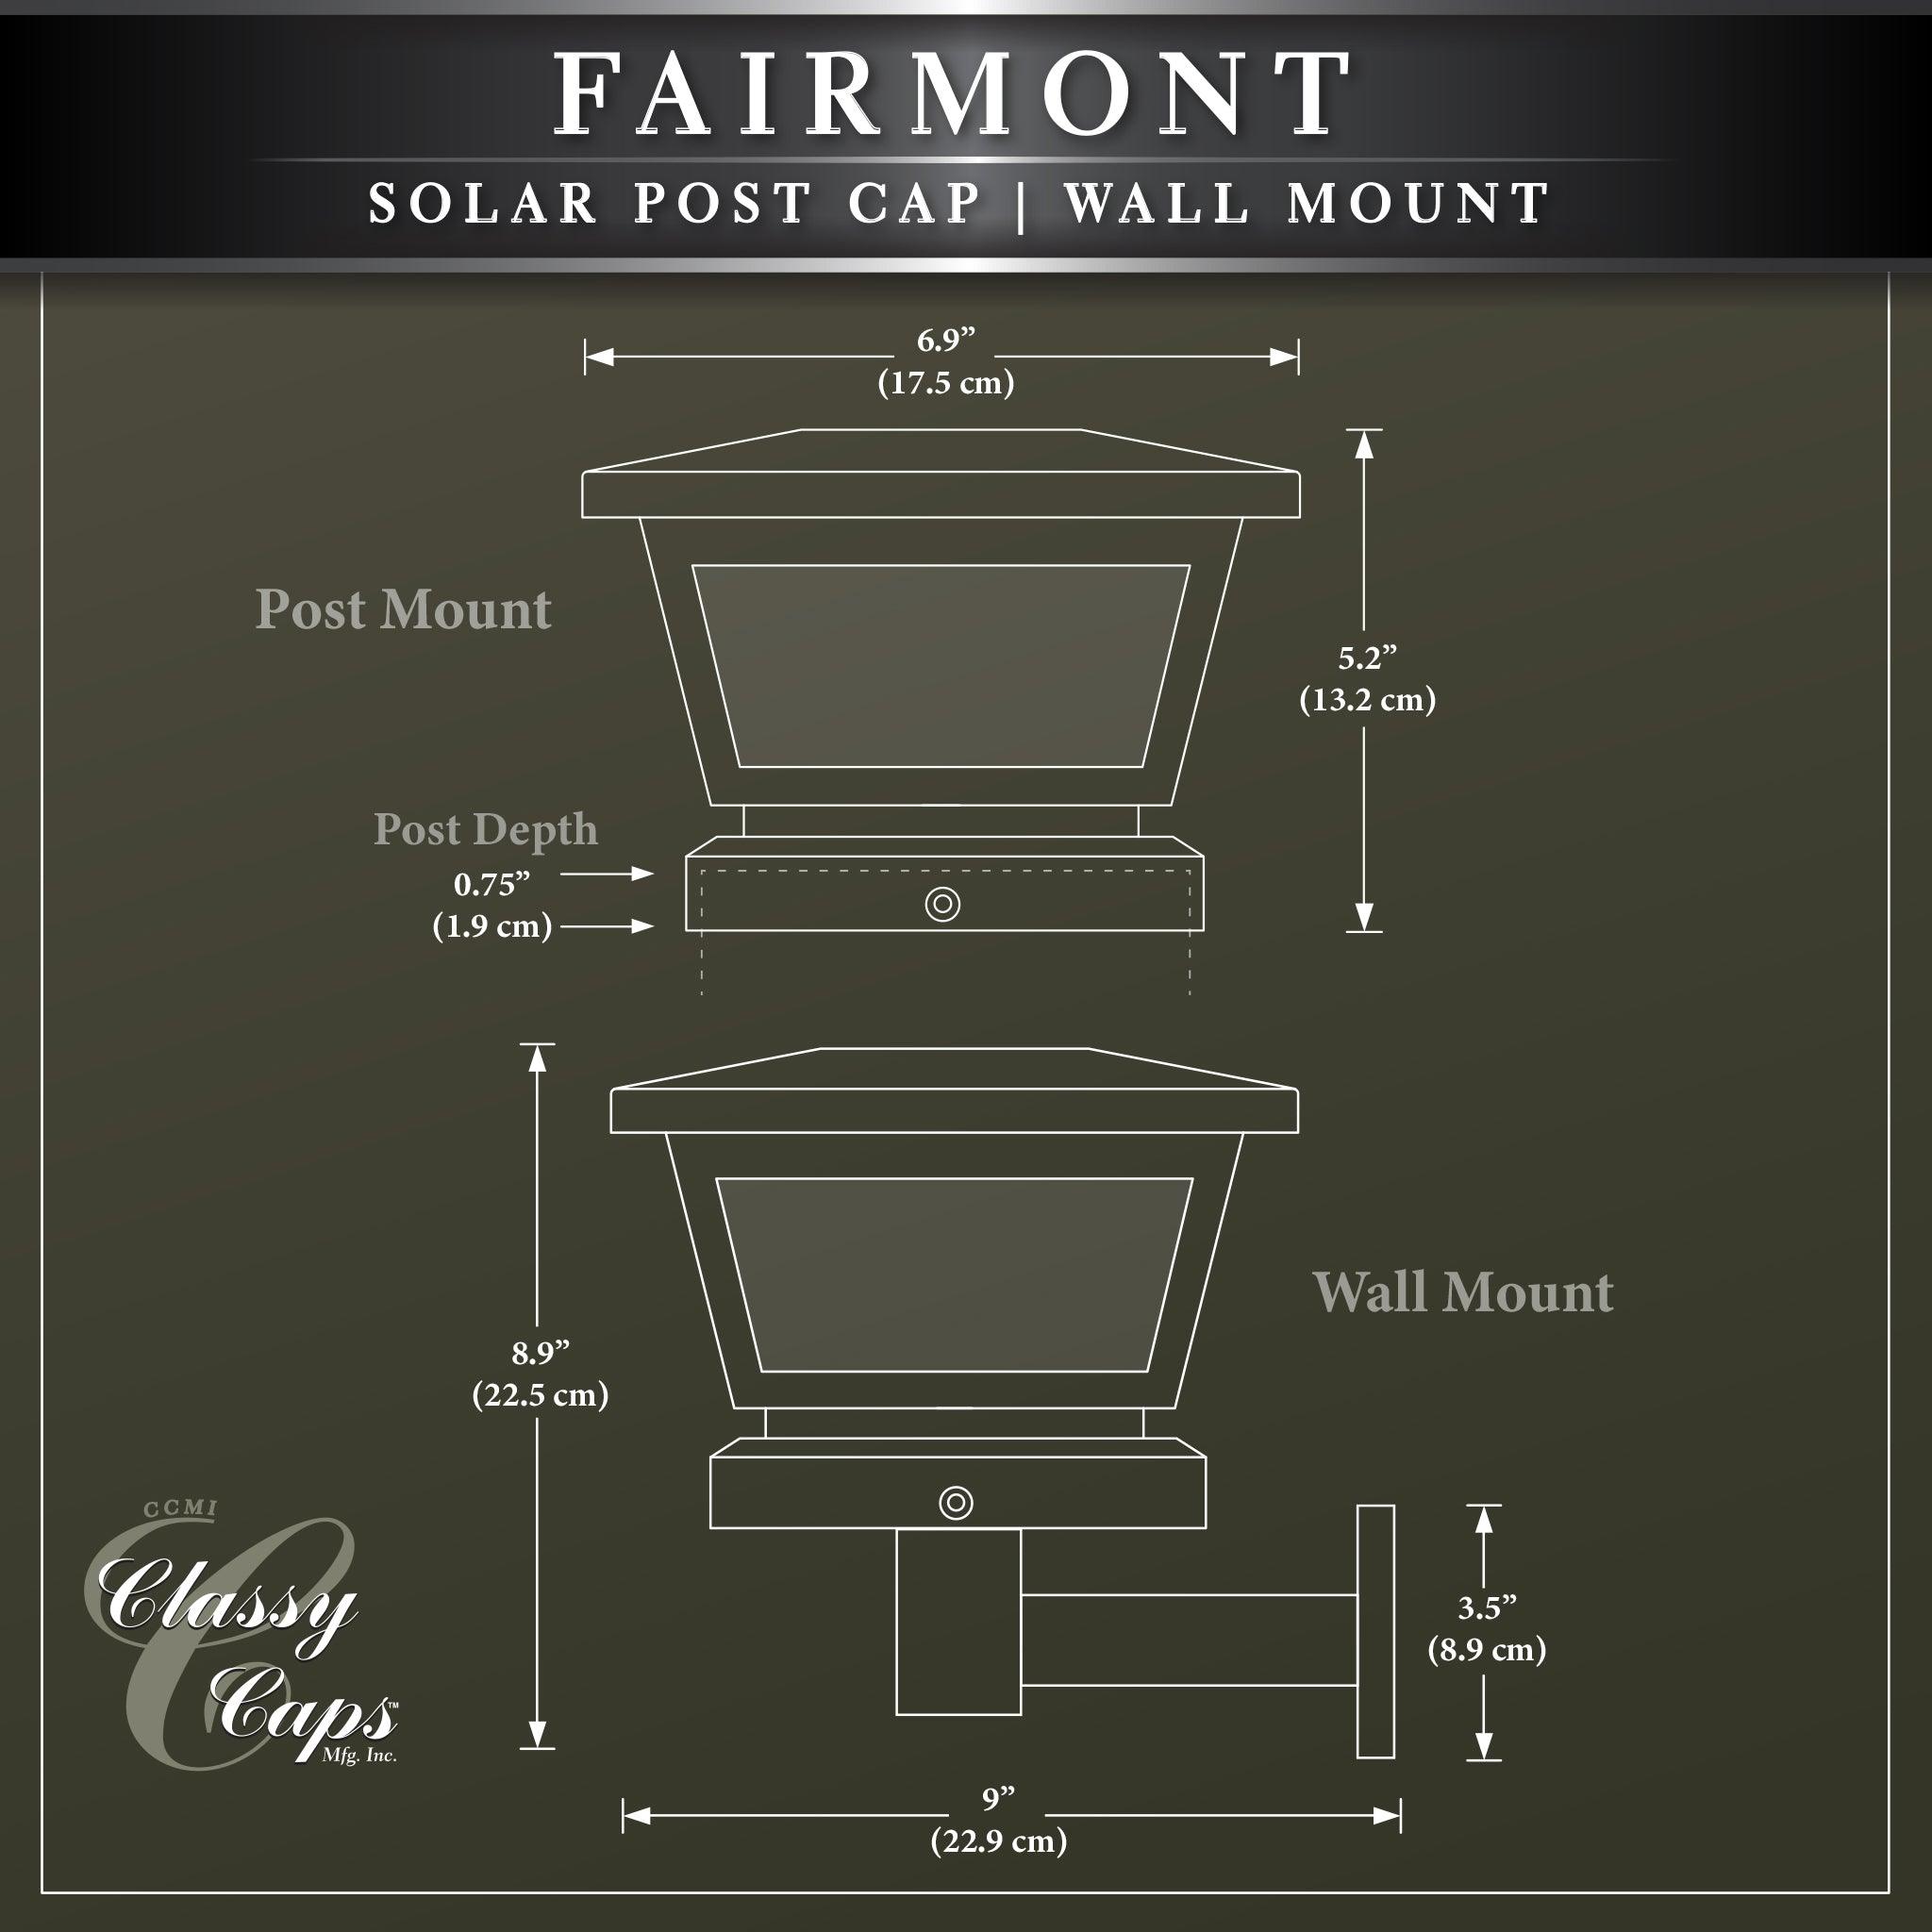 Fairmont Solar Post Cap/ Wall Mount - Black - Classy Caps Mfg. Inc.